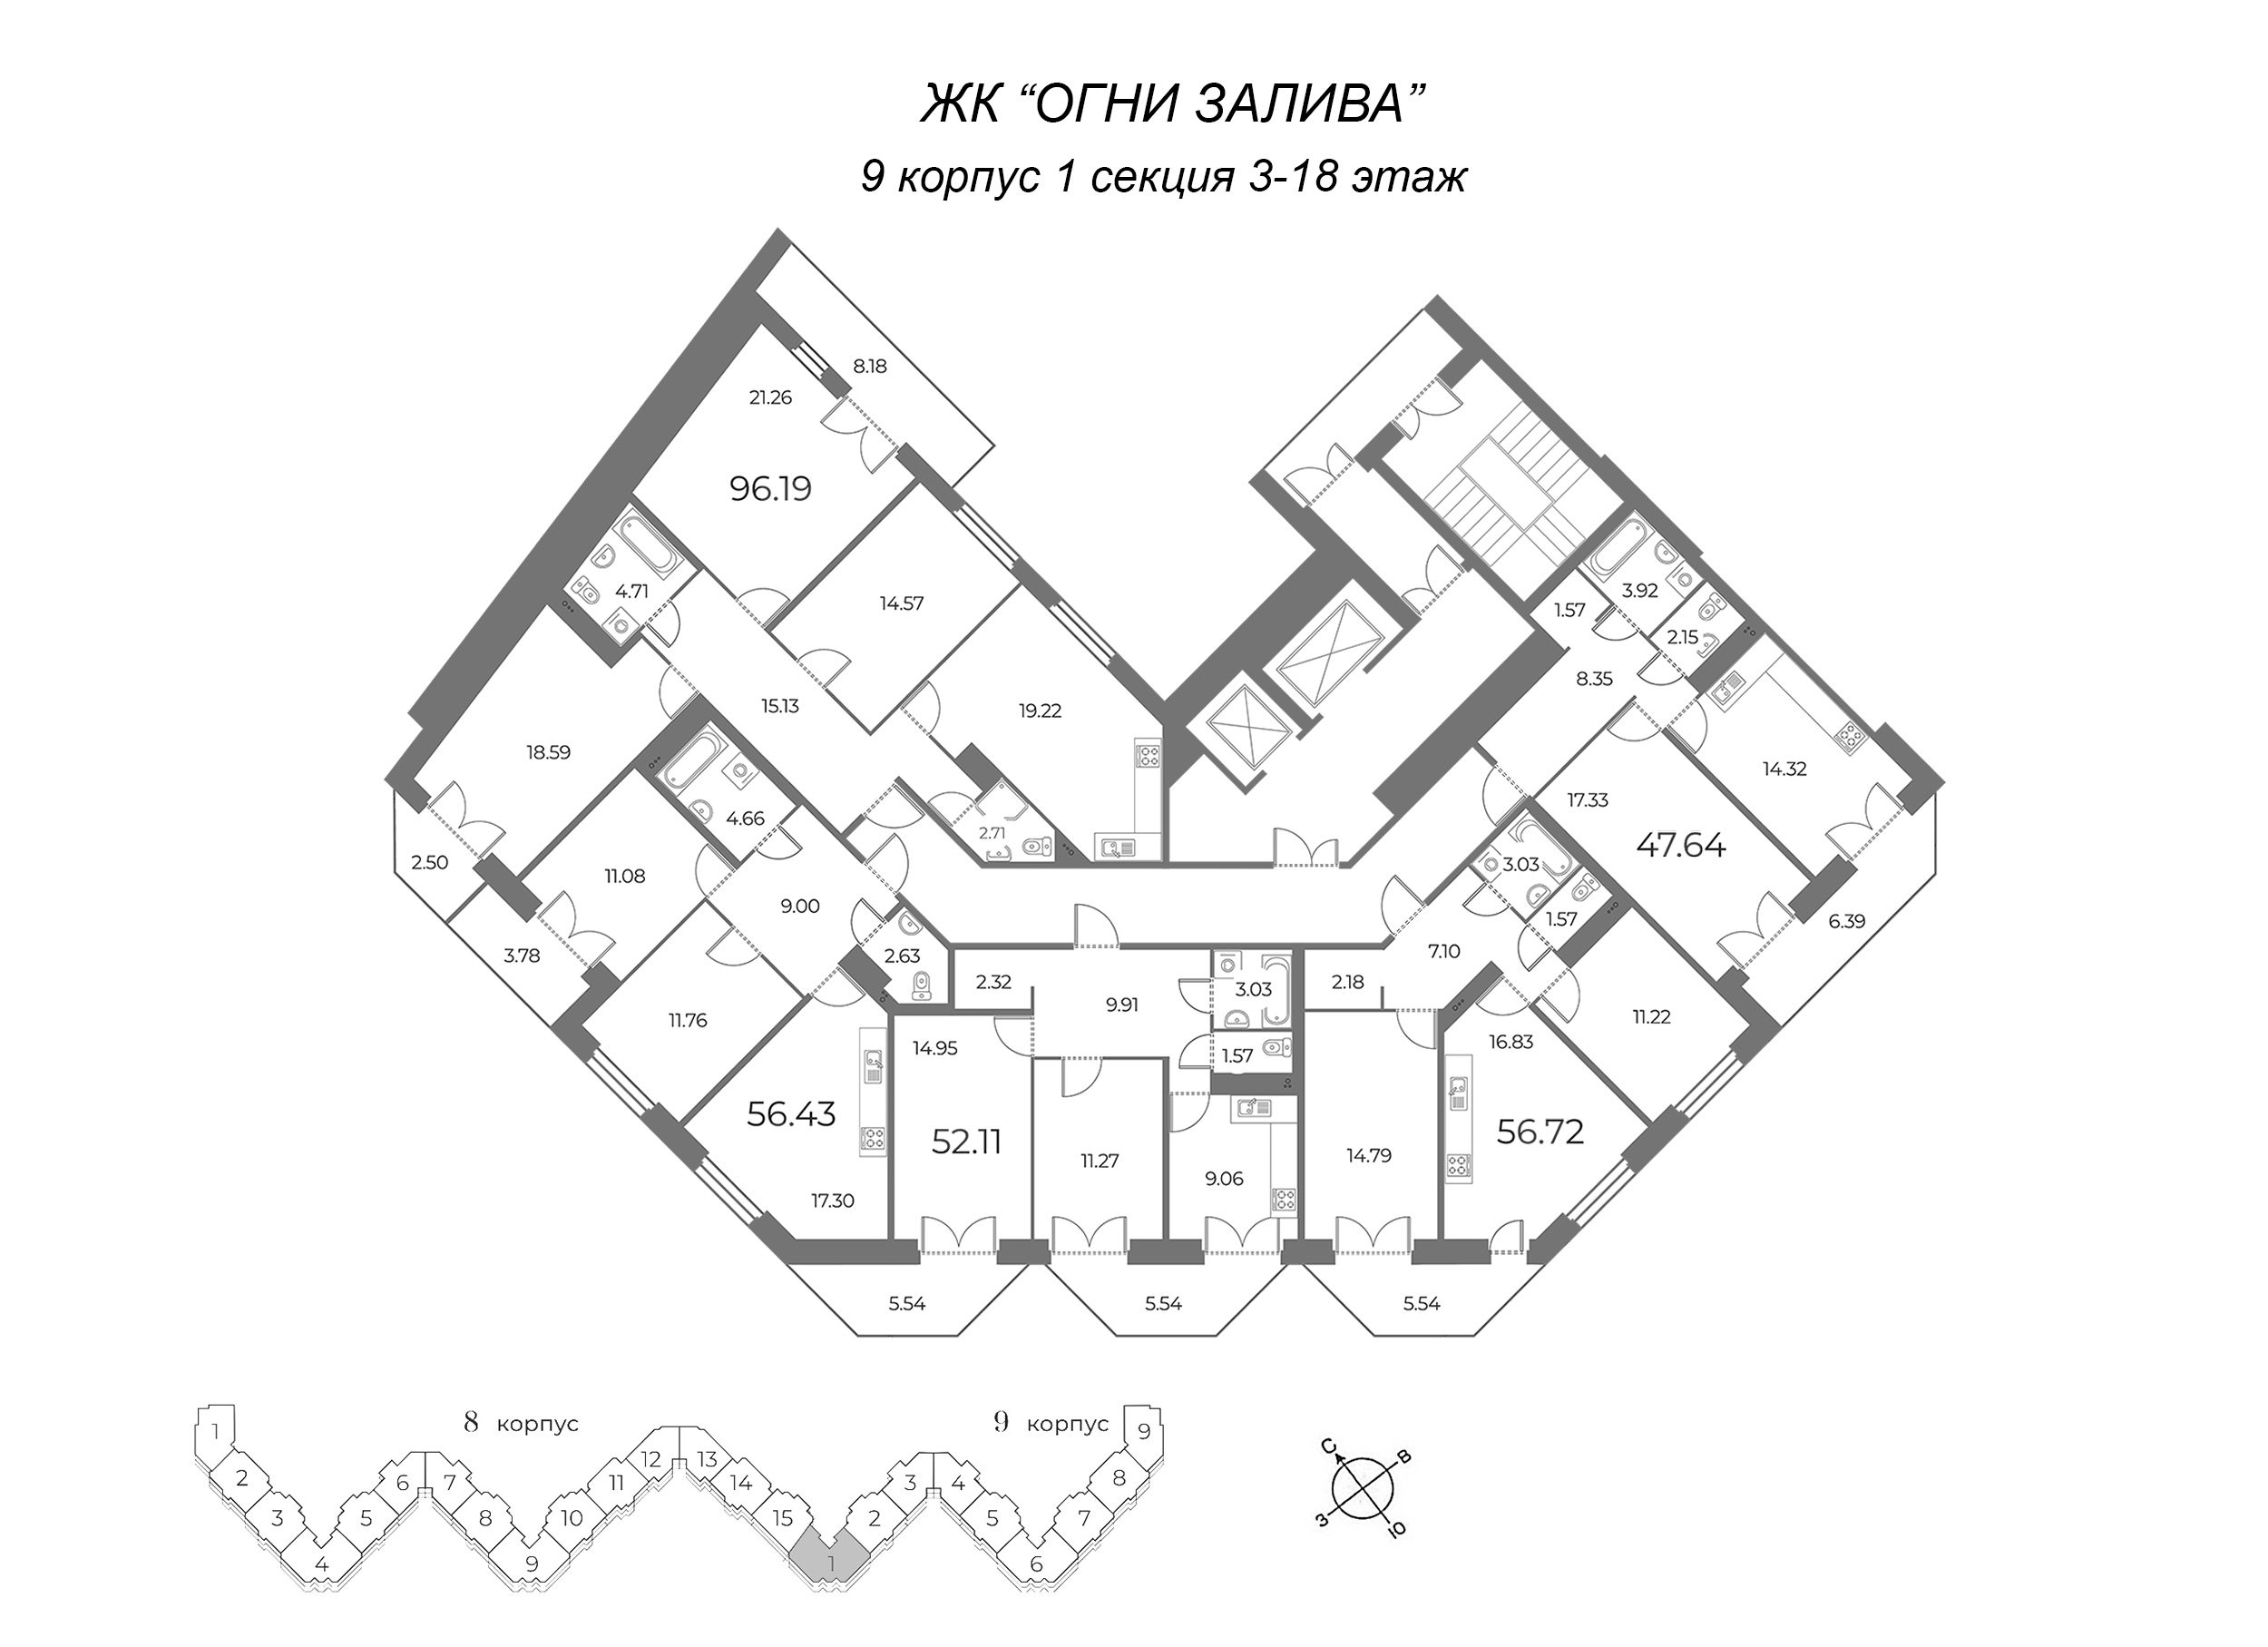 4-комнатная (Евро) квартира, 99.89 м² - планировка этажа